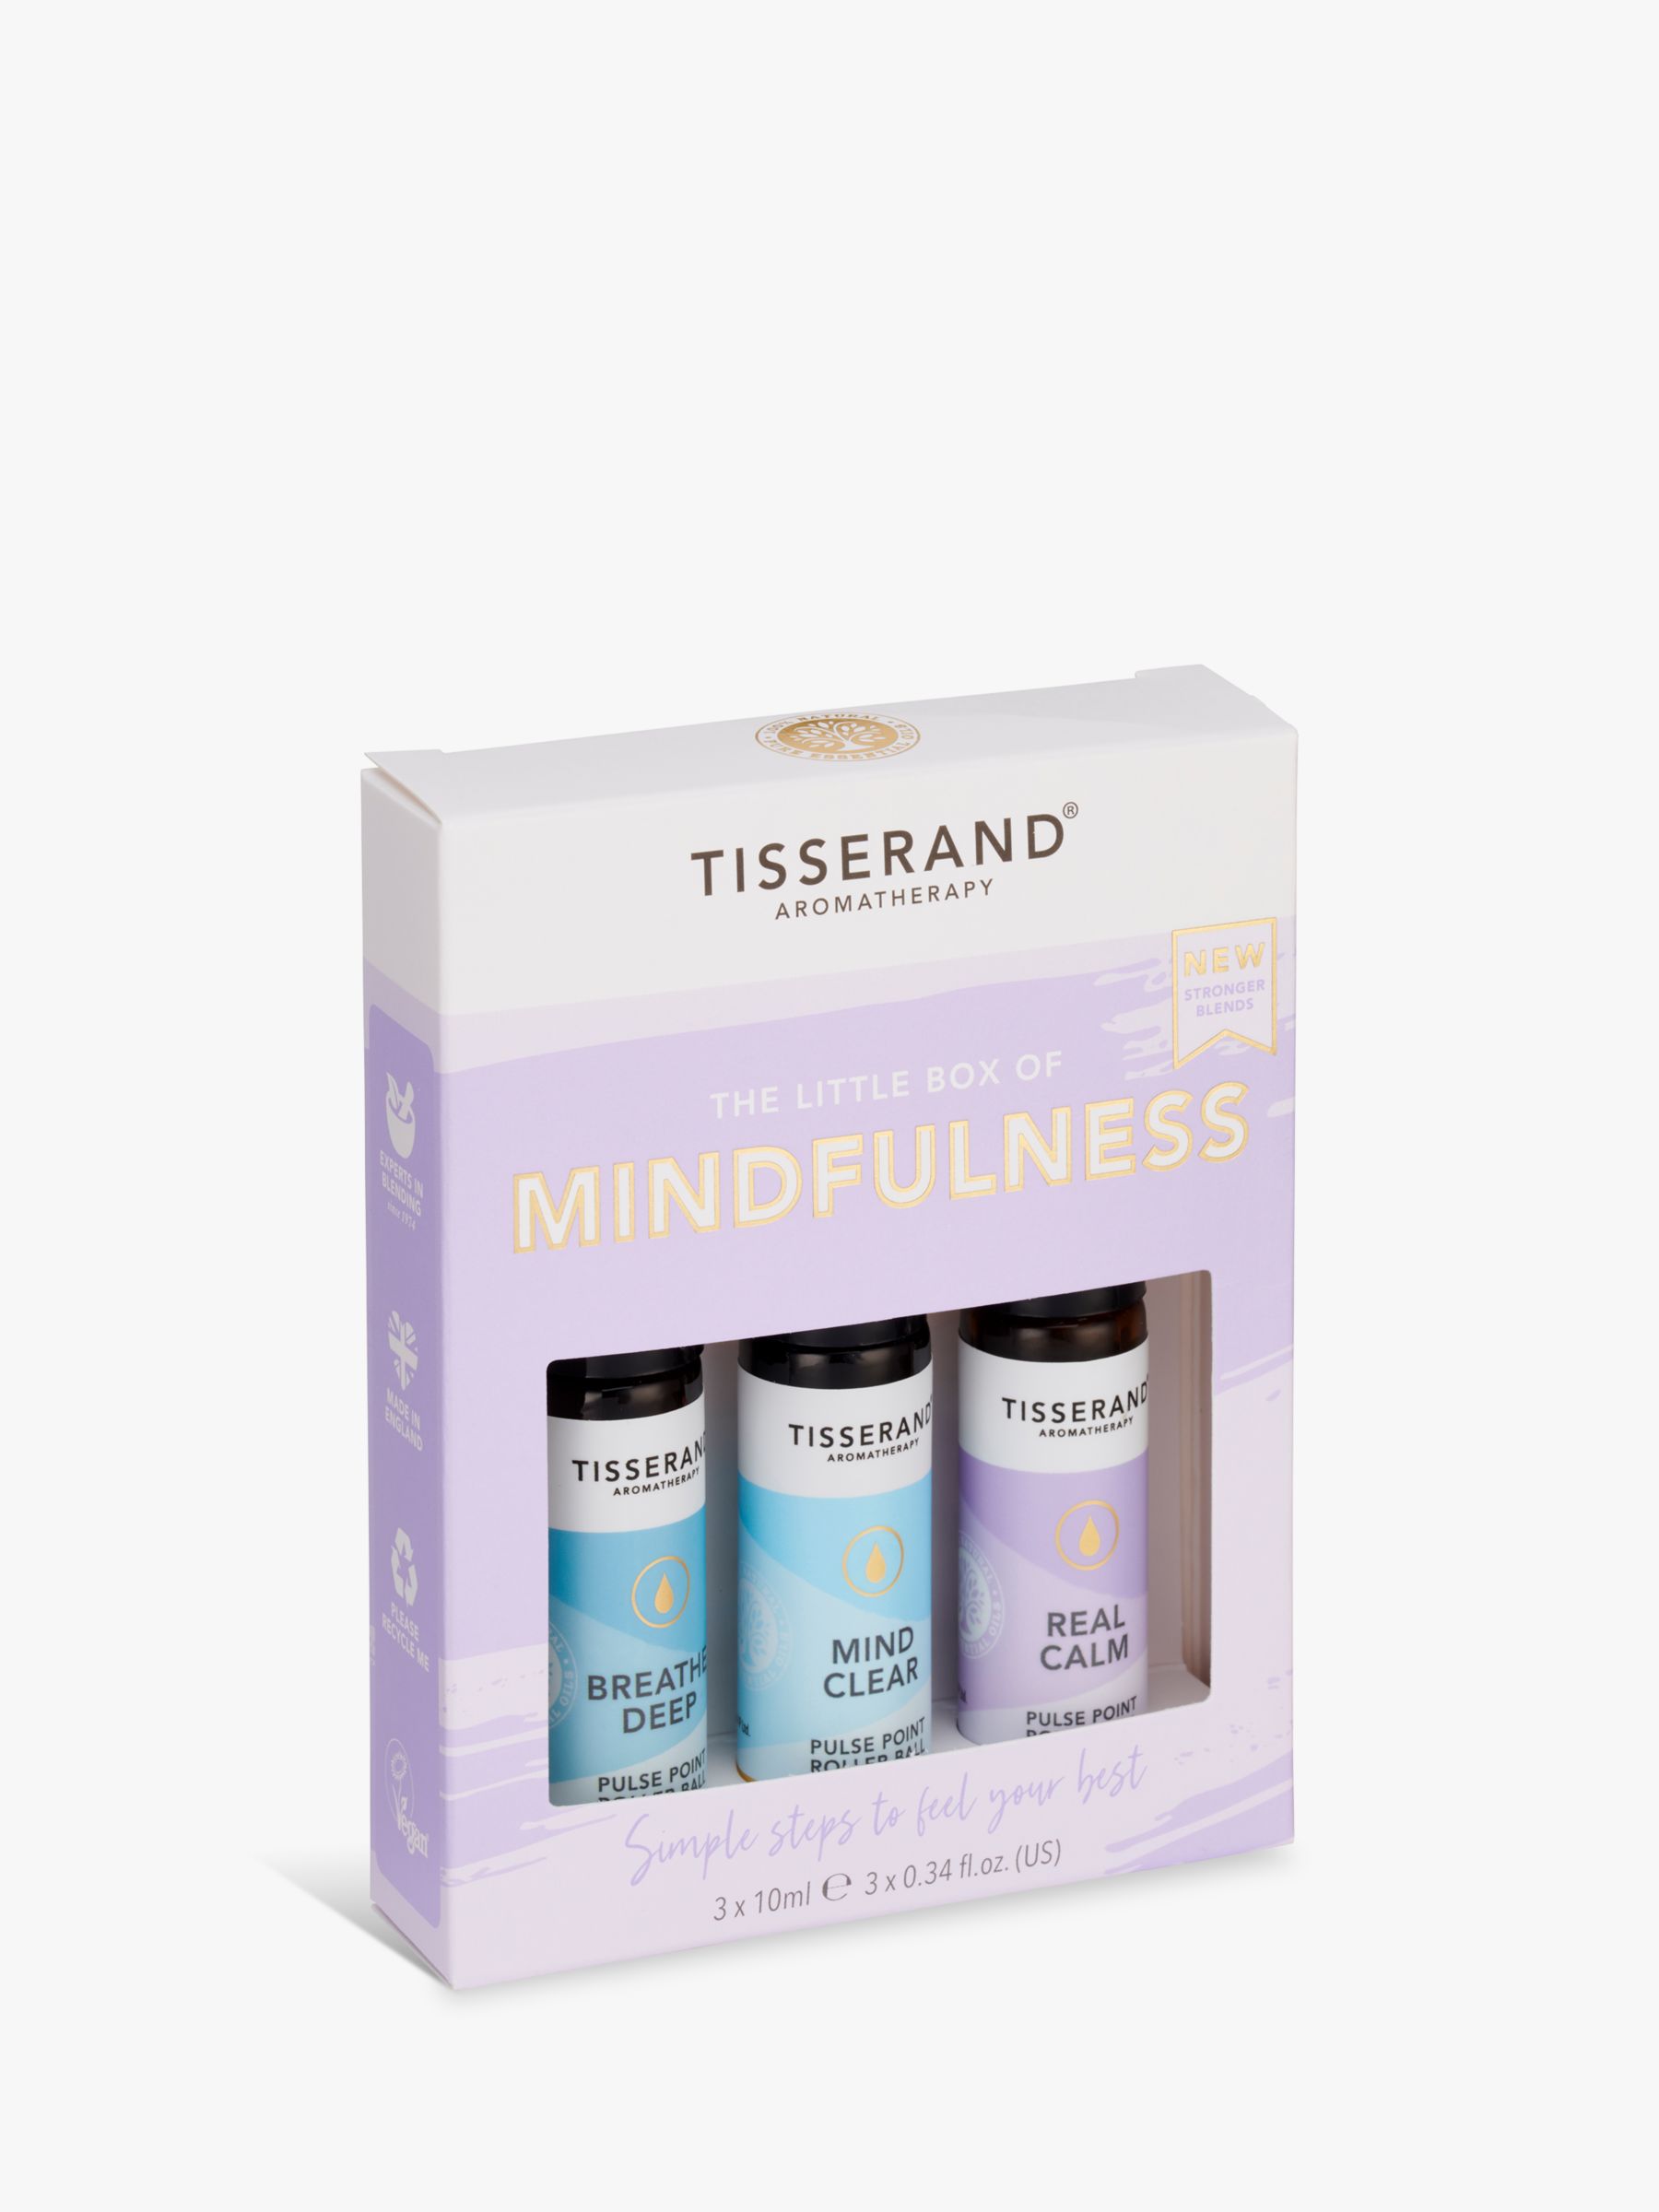 Tisserand Aromatherapy The Little Box Of Mindfulness Bodycare Gift Set 2